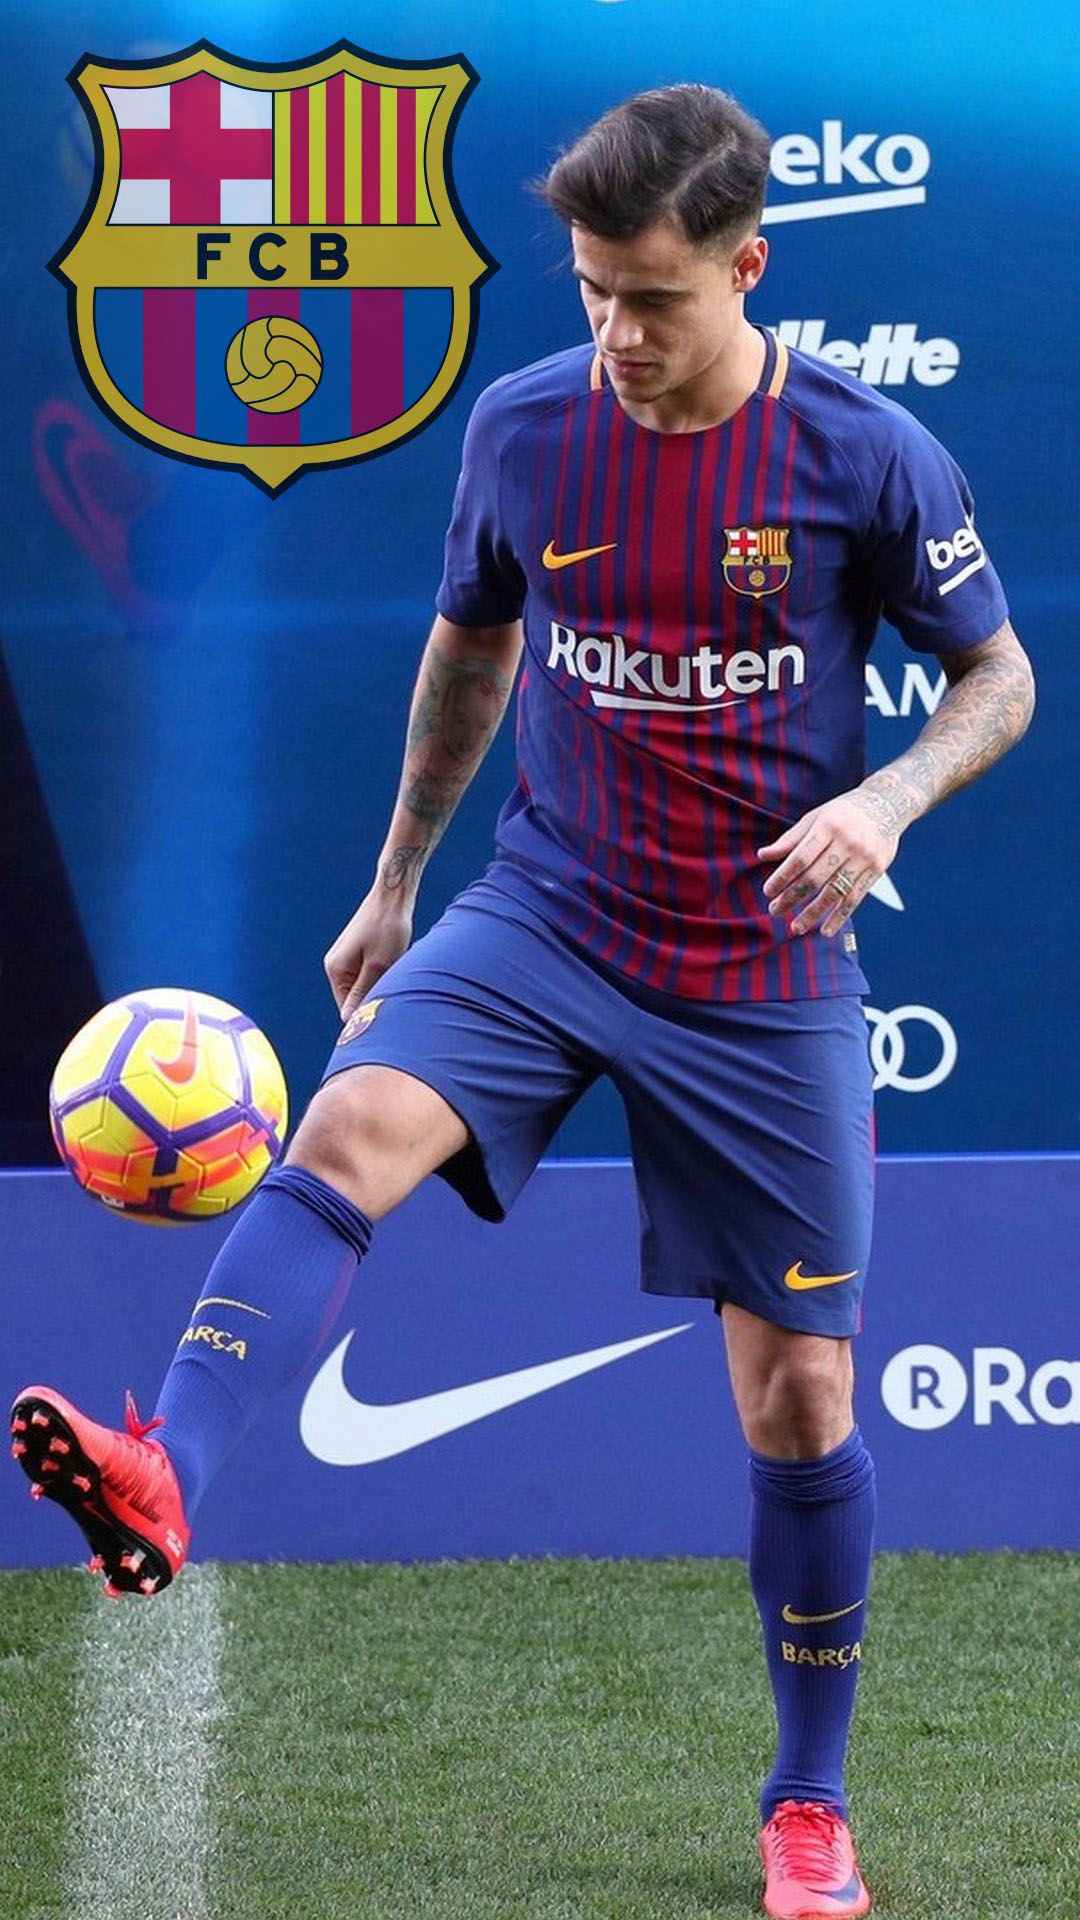 Coutinho FC Barcelona Wallpaper Android - 2019 Android Fondos de pantalla